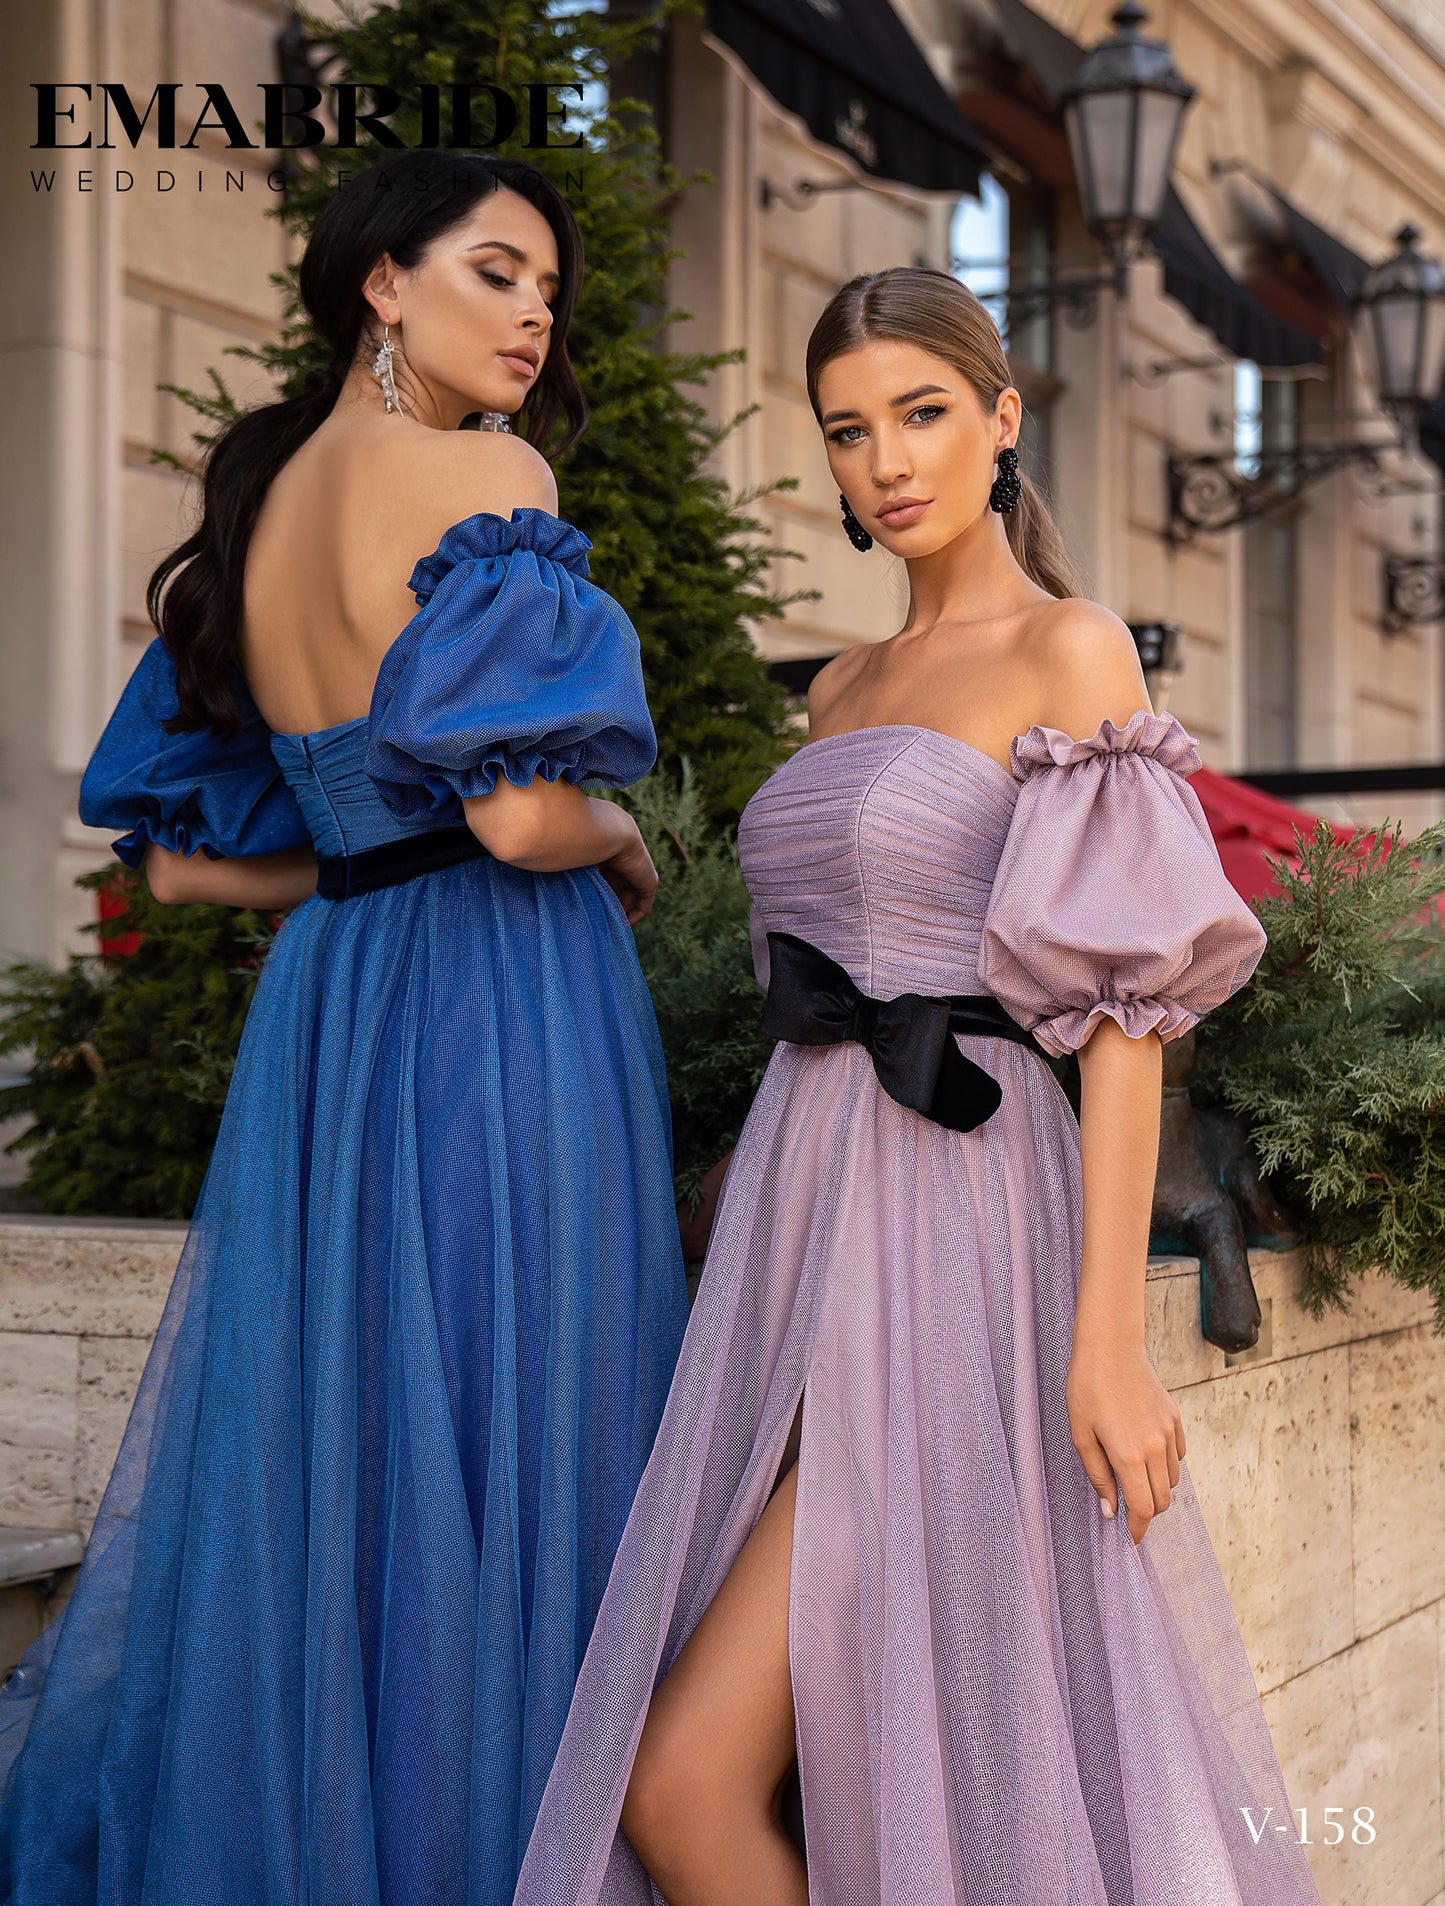 Emabride V-159 Floor Length Exquisite Evening Dress on models - Rofial Beauty